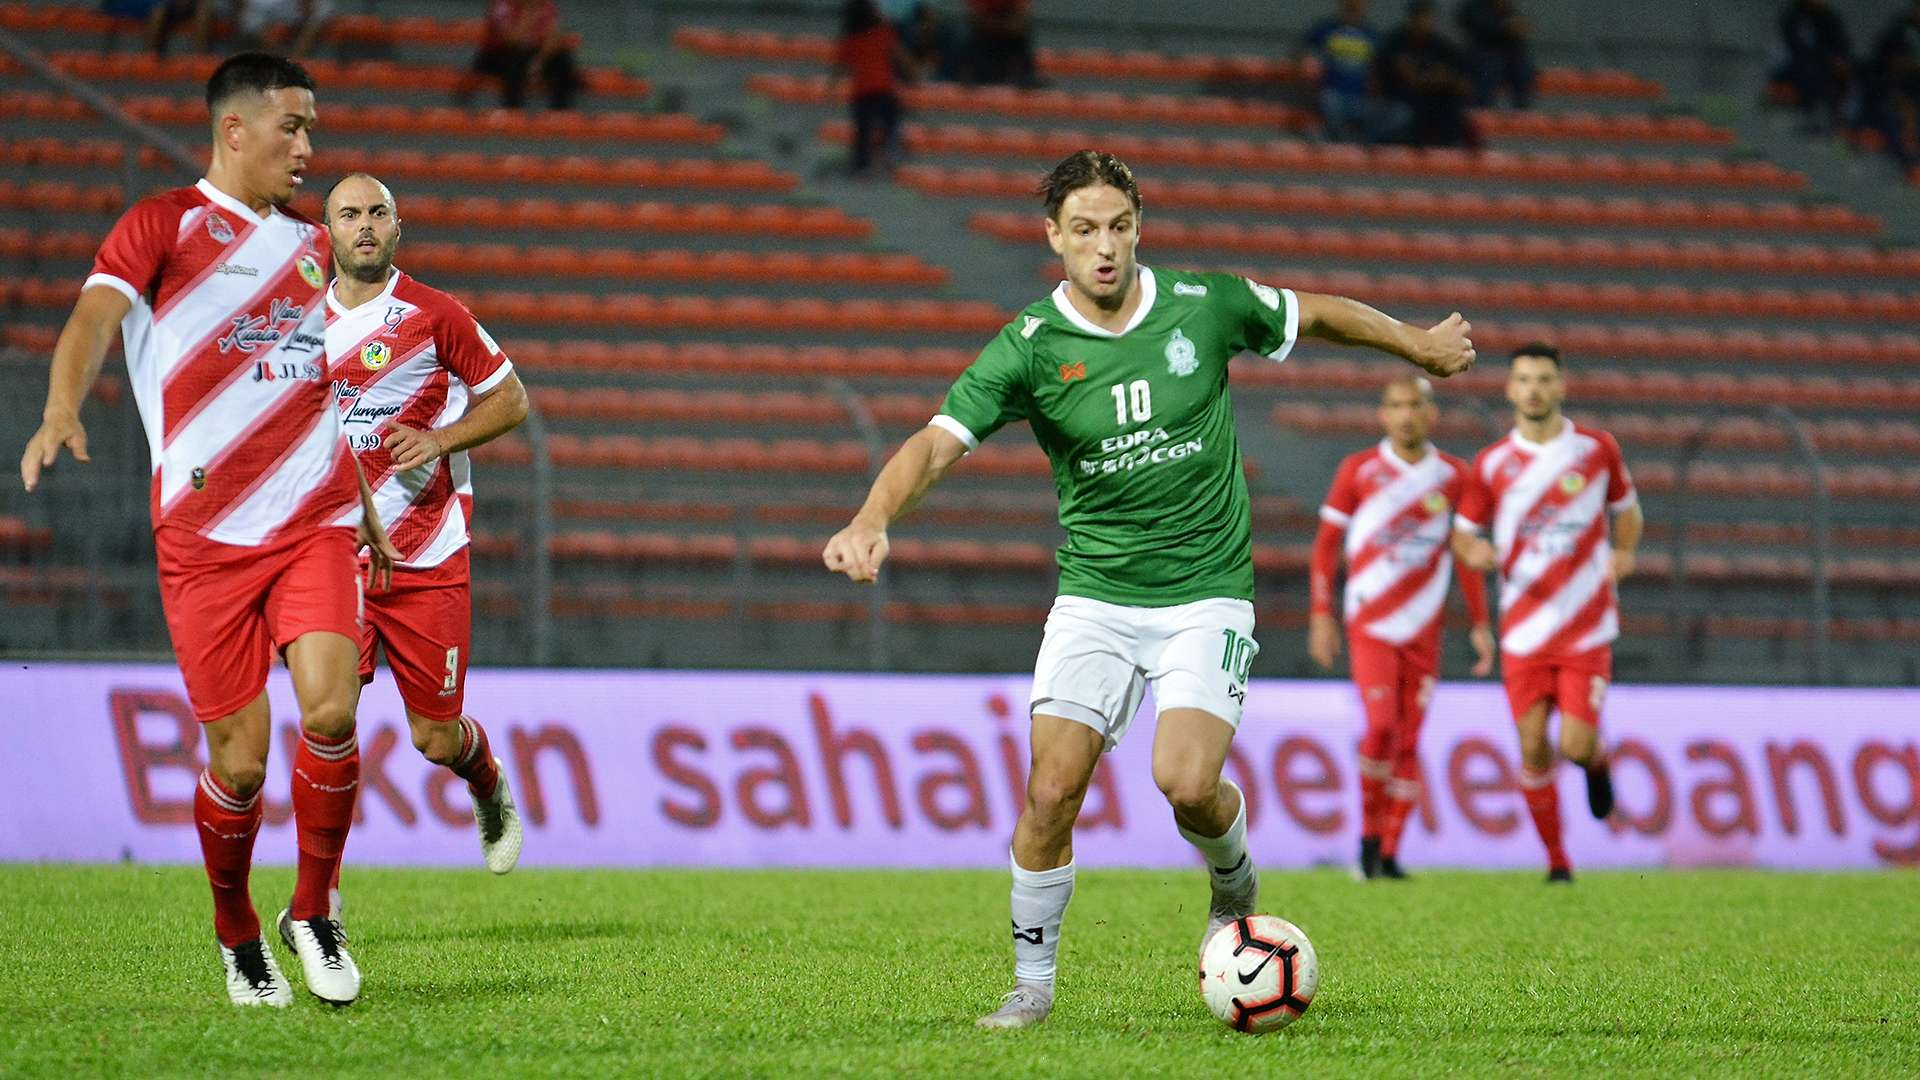 Luka Milunovic, Kuala Lumpur v Melaka, Malaysia Super League, 19 Jun 2019